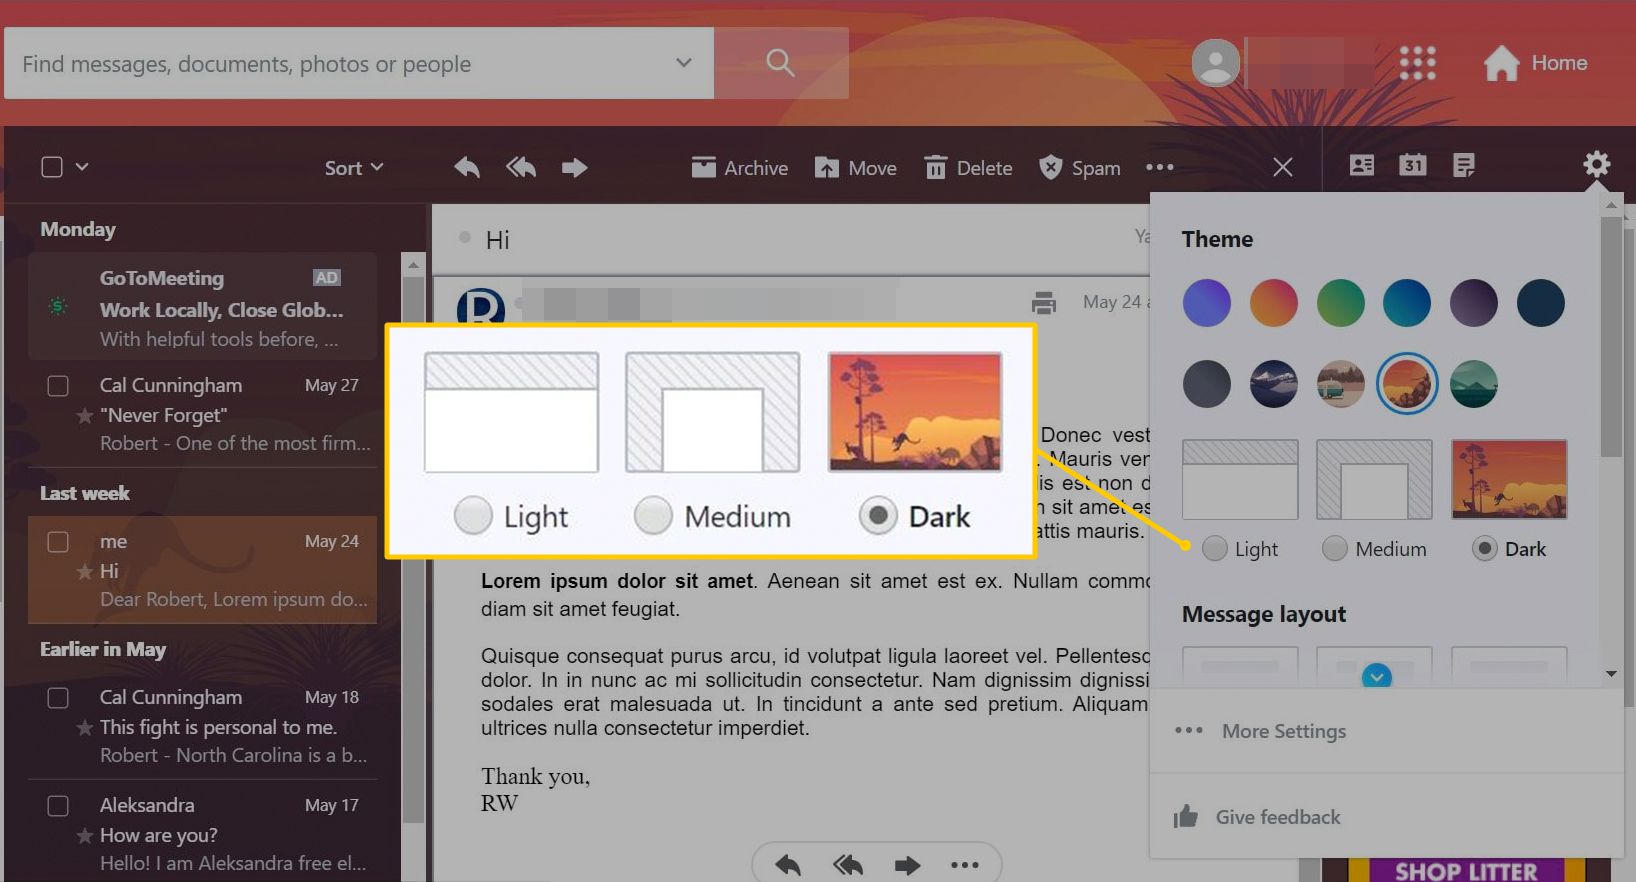 Licht/Gemiddeld/Donker opties in Yahoo Mail